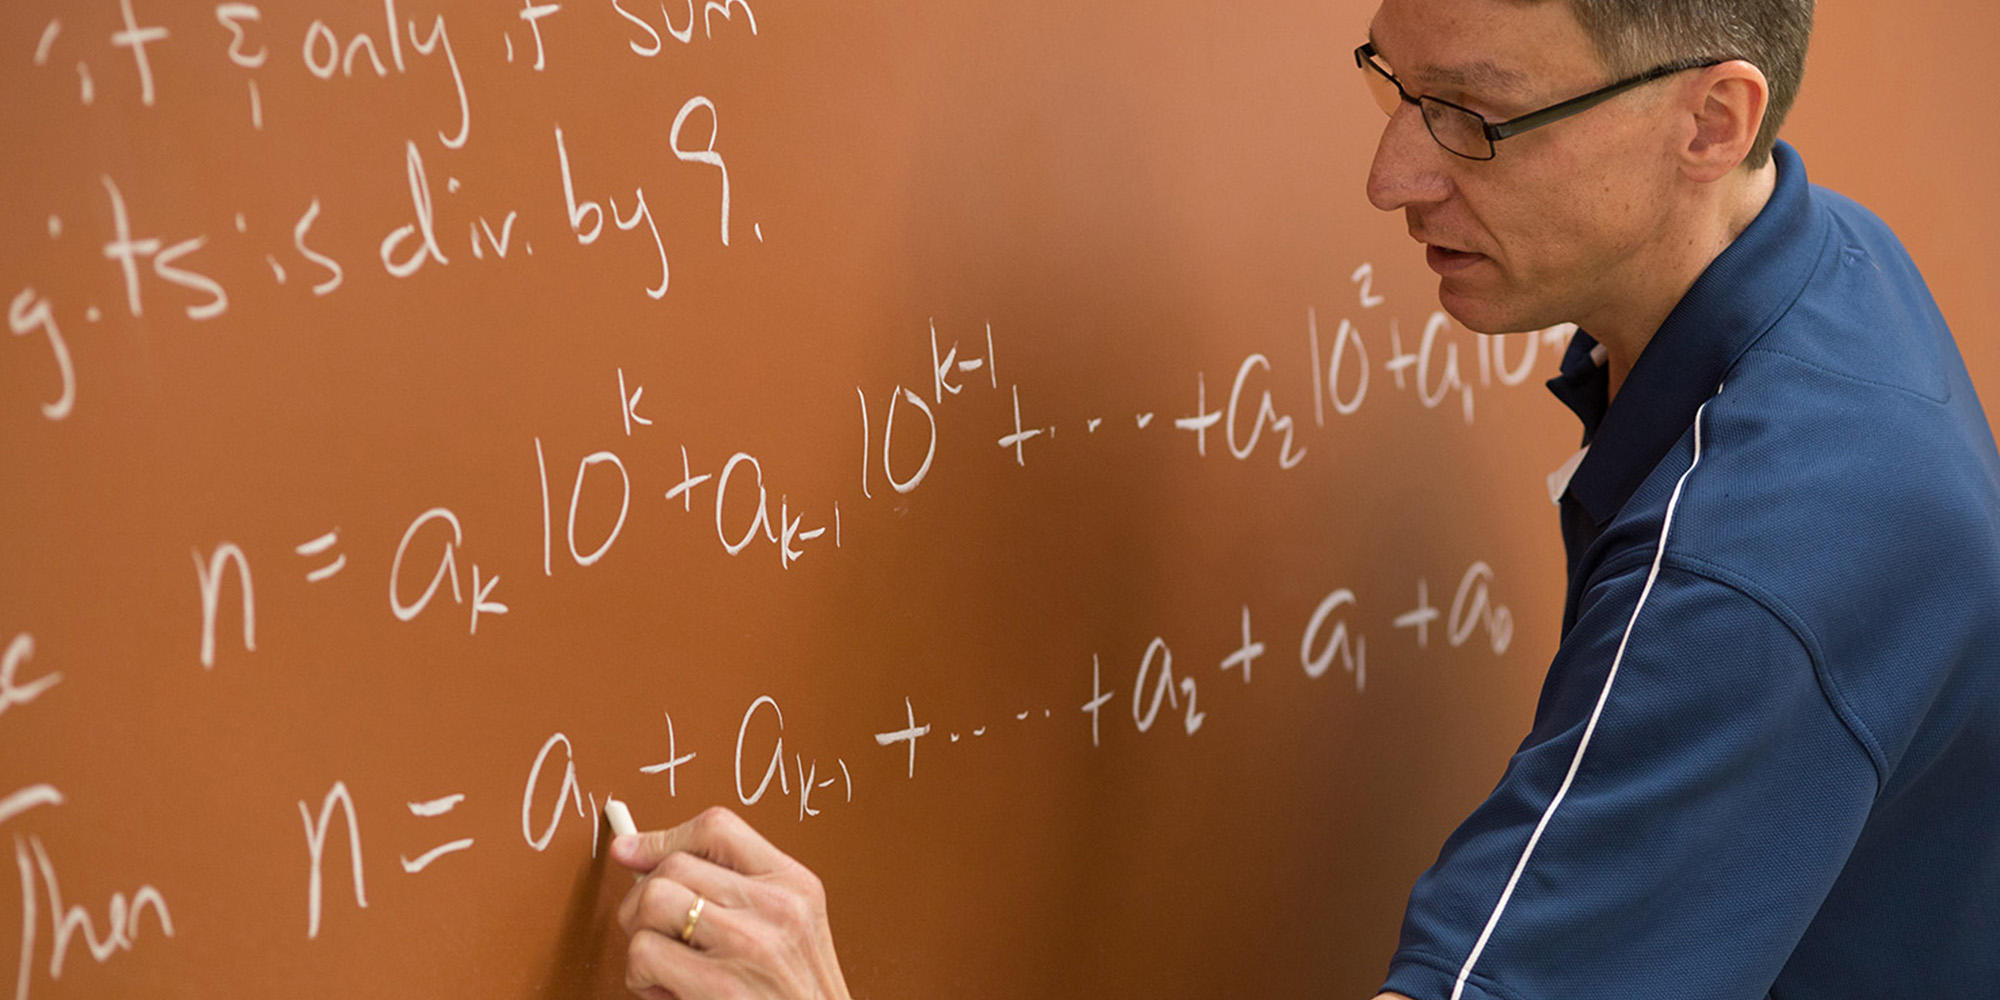 Math Professor Writing Equation On A Chalkboard